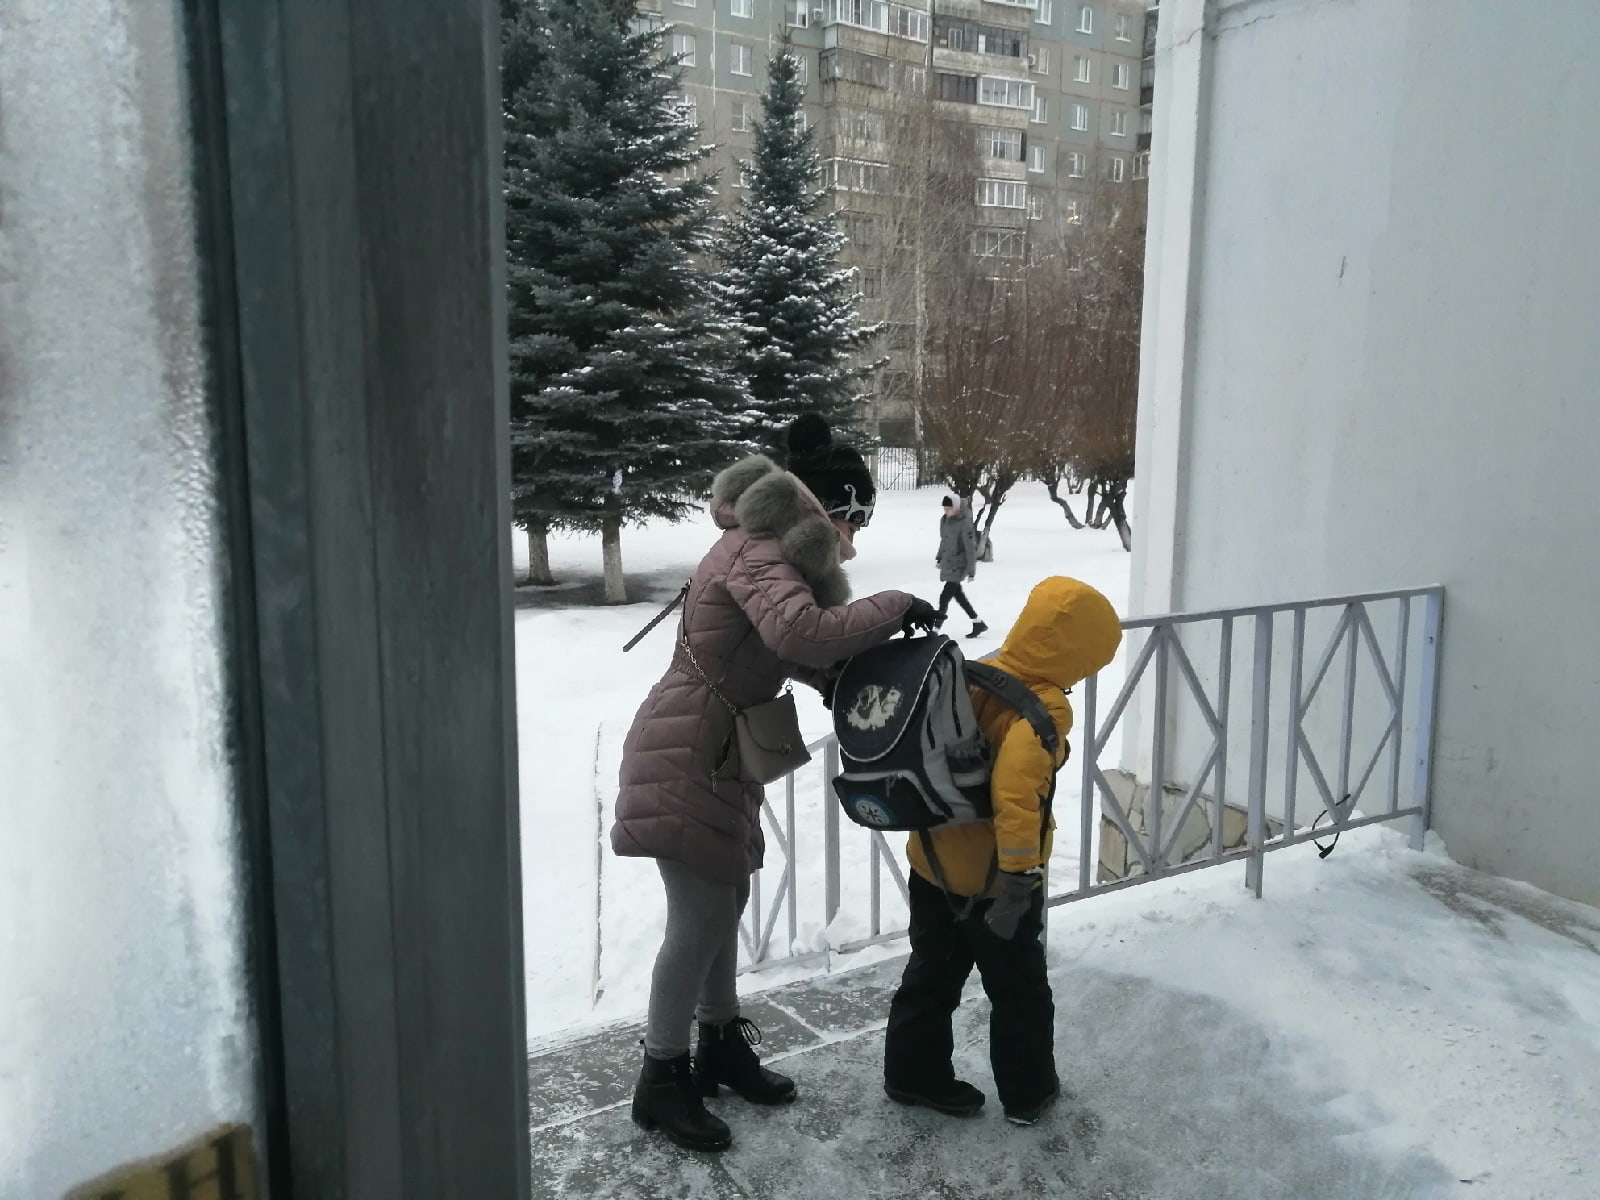 20 февраля отмена занятий в школах челябинска. Отменили занятия в школах. Школа 57 Челябинск. Дети идут в школу зимой. Дети идут в школу в Мороз.